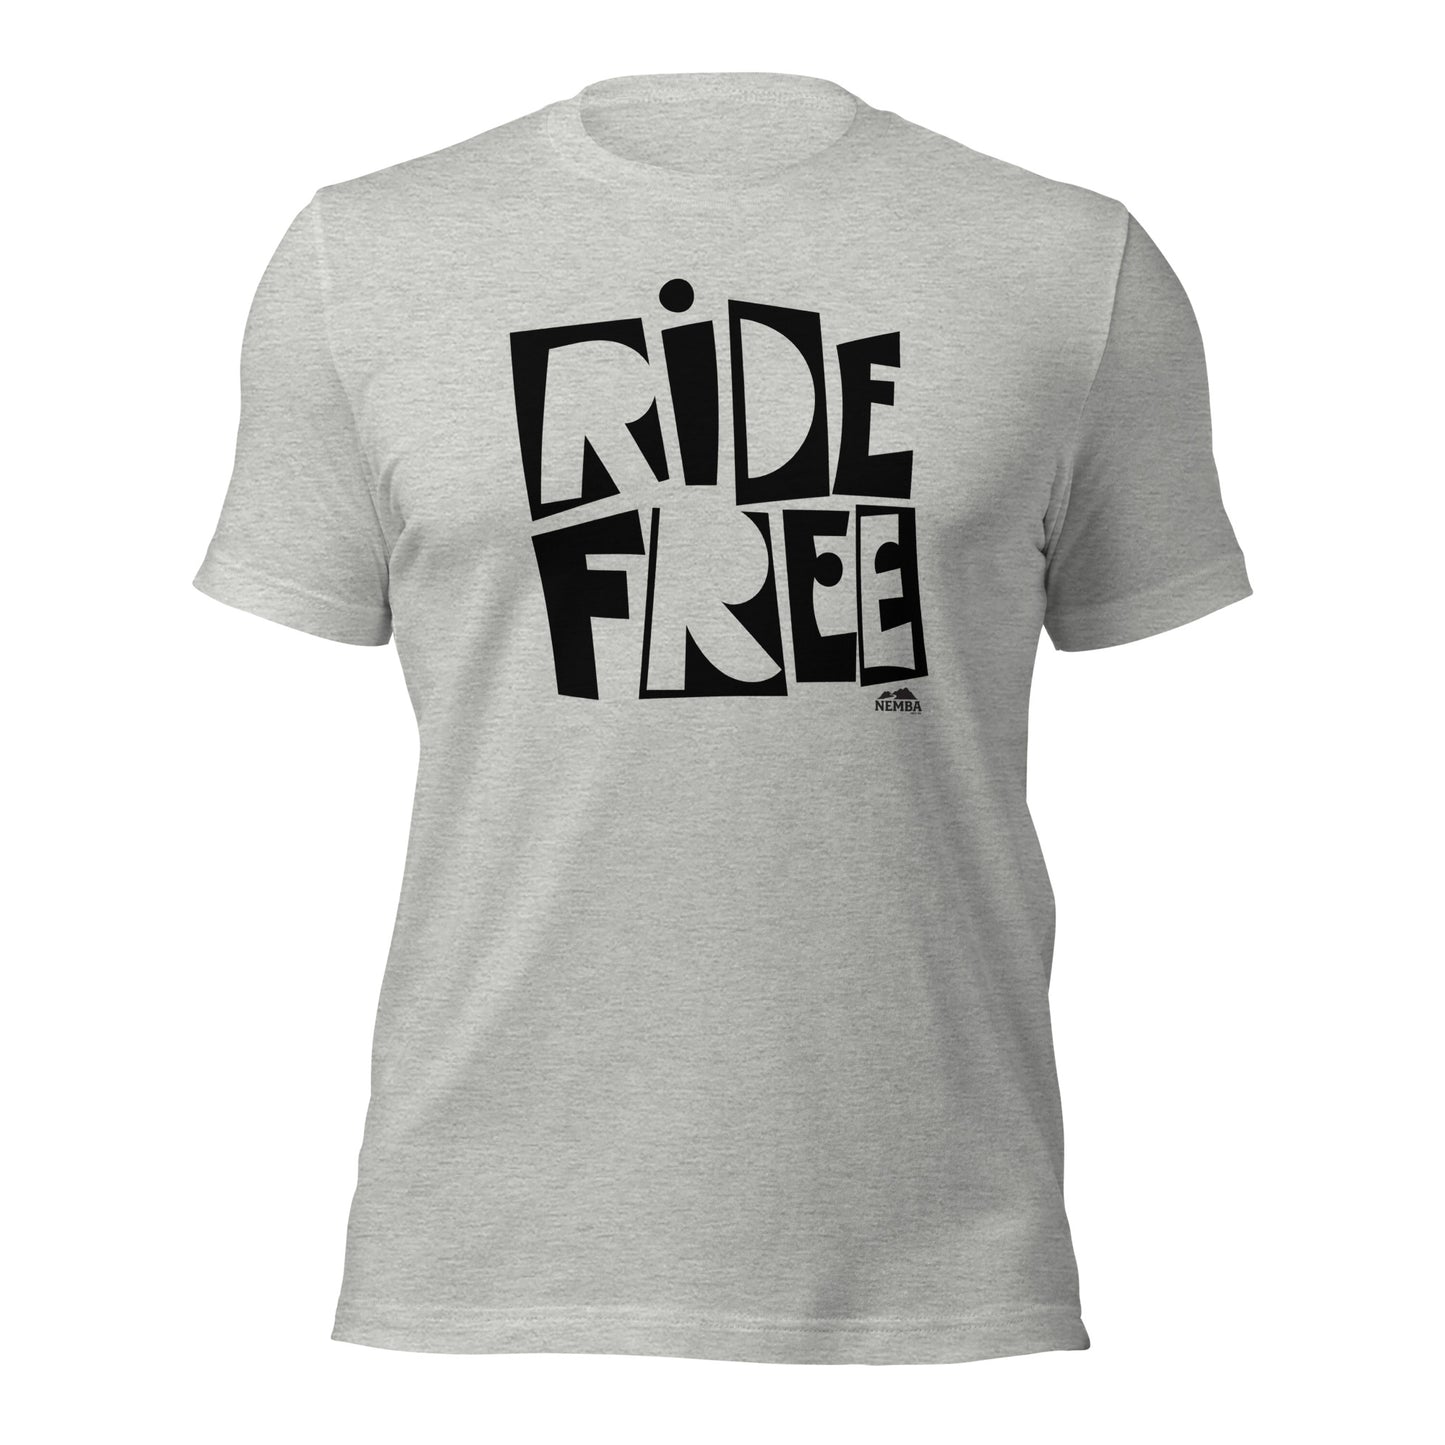 Unisex T-Shirt, Black Ride Free Logo